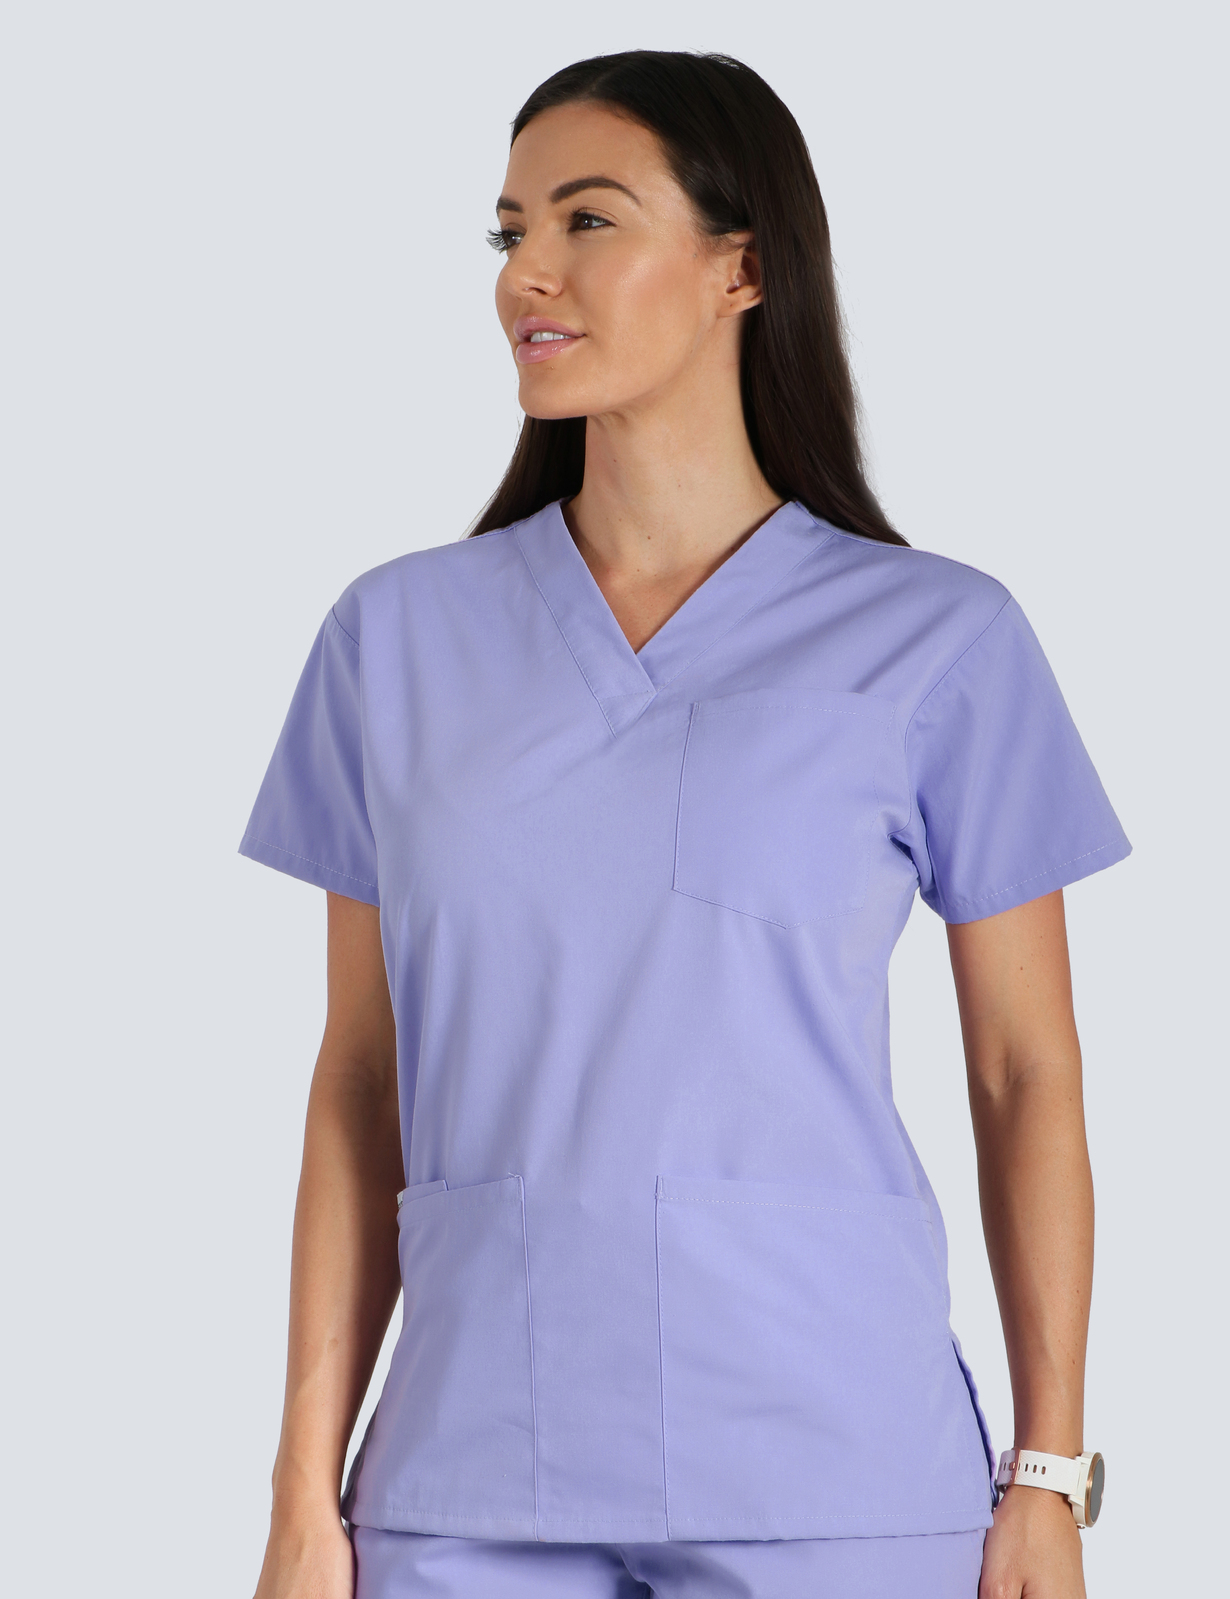 Queensland Children's Hospital Emergency Department Clinical Nurse  Uniform Top Bundle  (4 Pocket Top in Lilav  incl Logos)